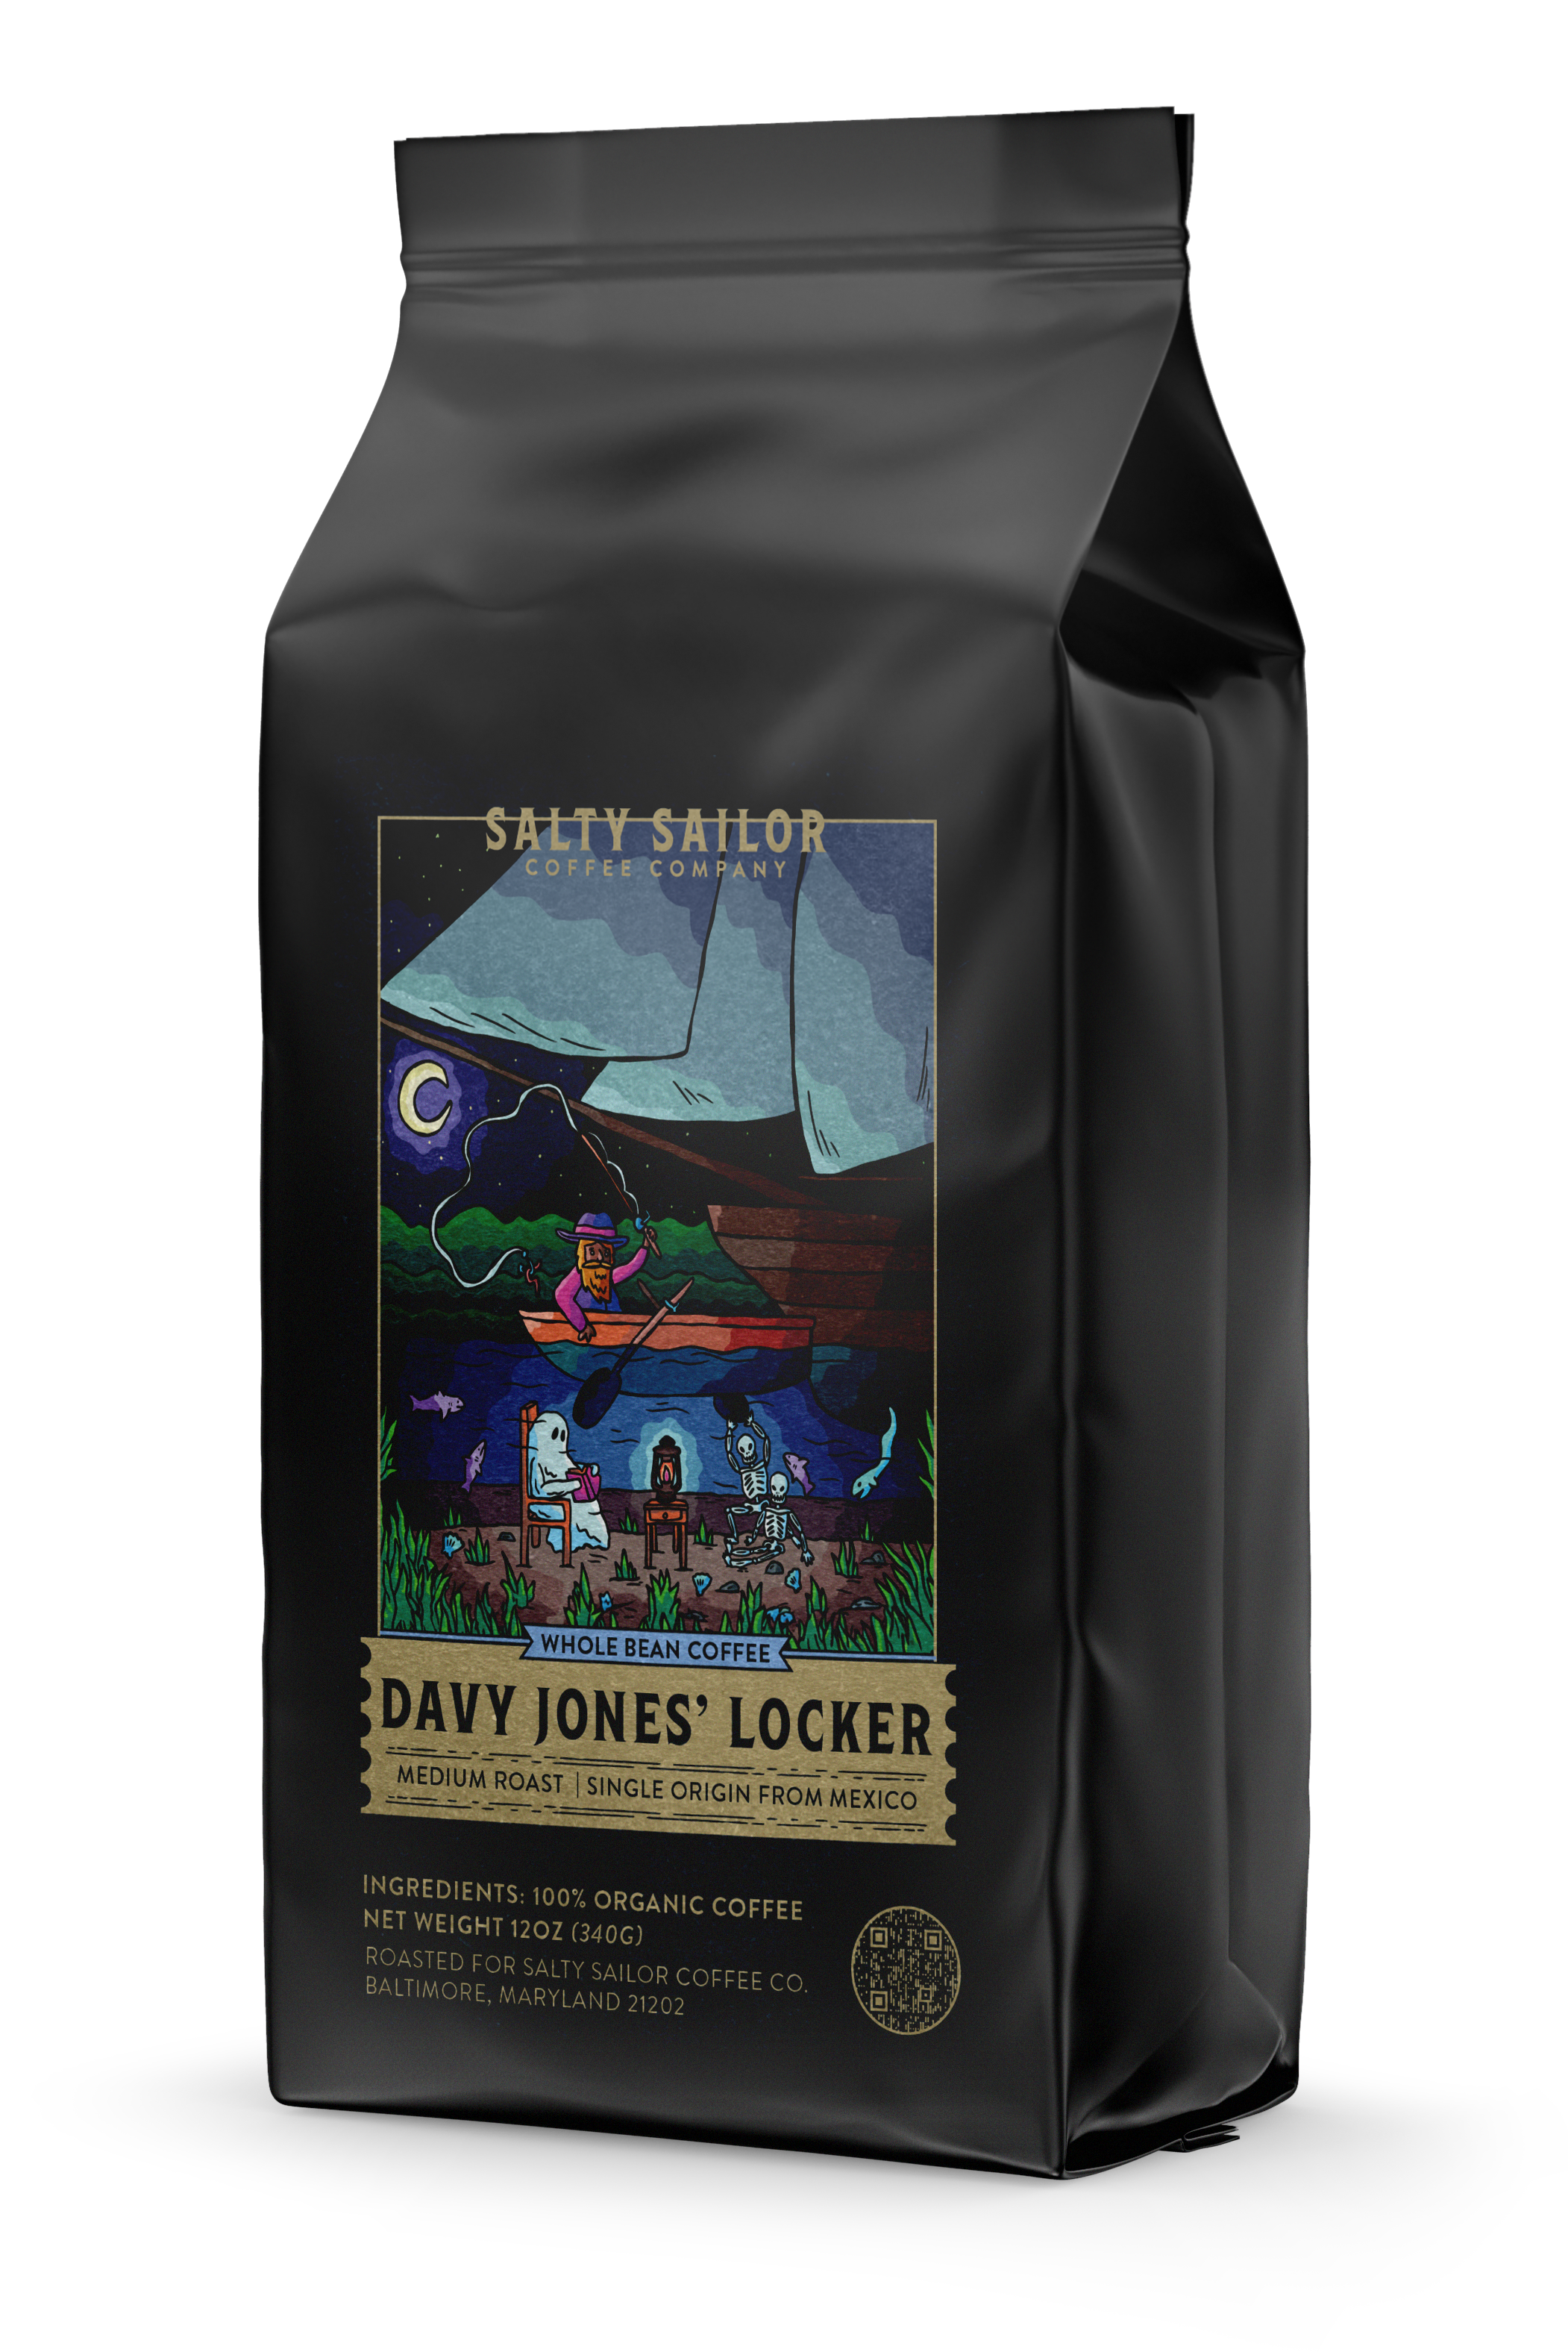 Davy Jones' Locker: A Cold Brew Blend